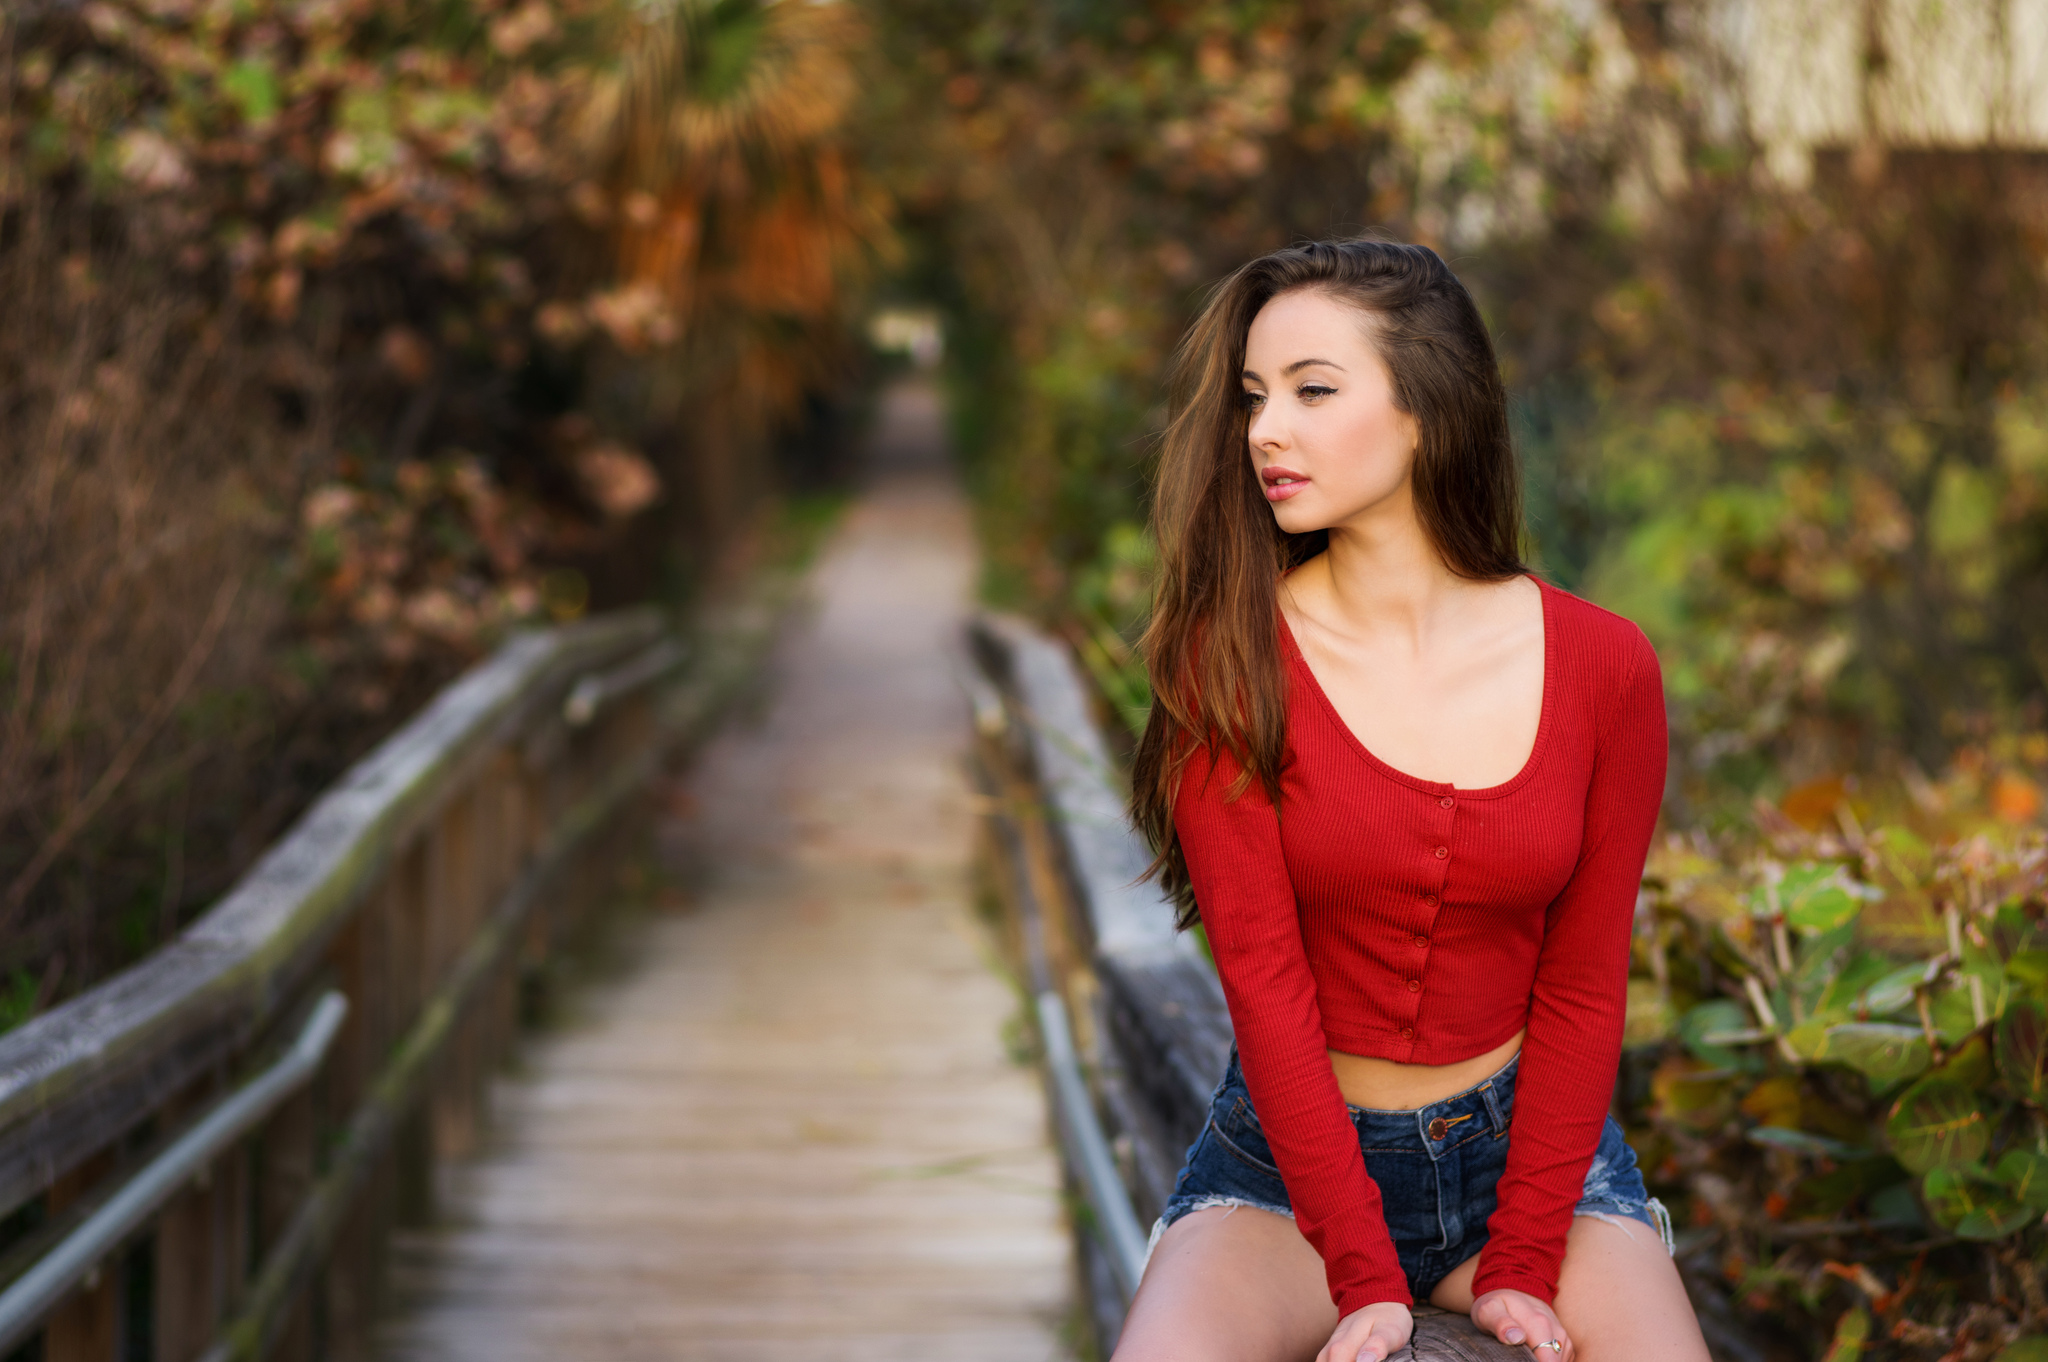 Theresa Grant Christopher Rankin Model Women Outdoors Women Crop Top Looking Away Red Sweater Brunet 2048x1362